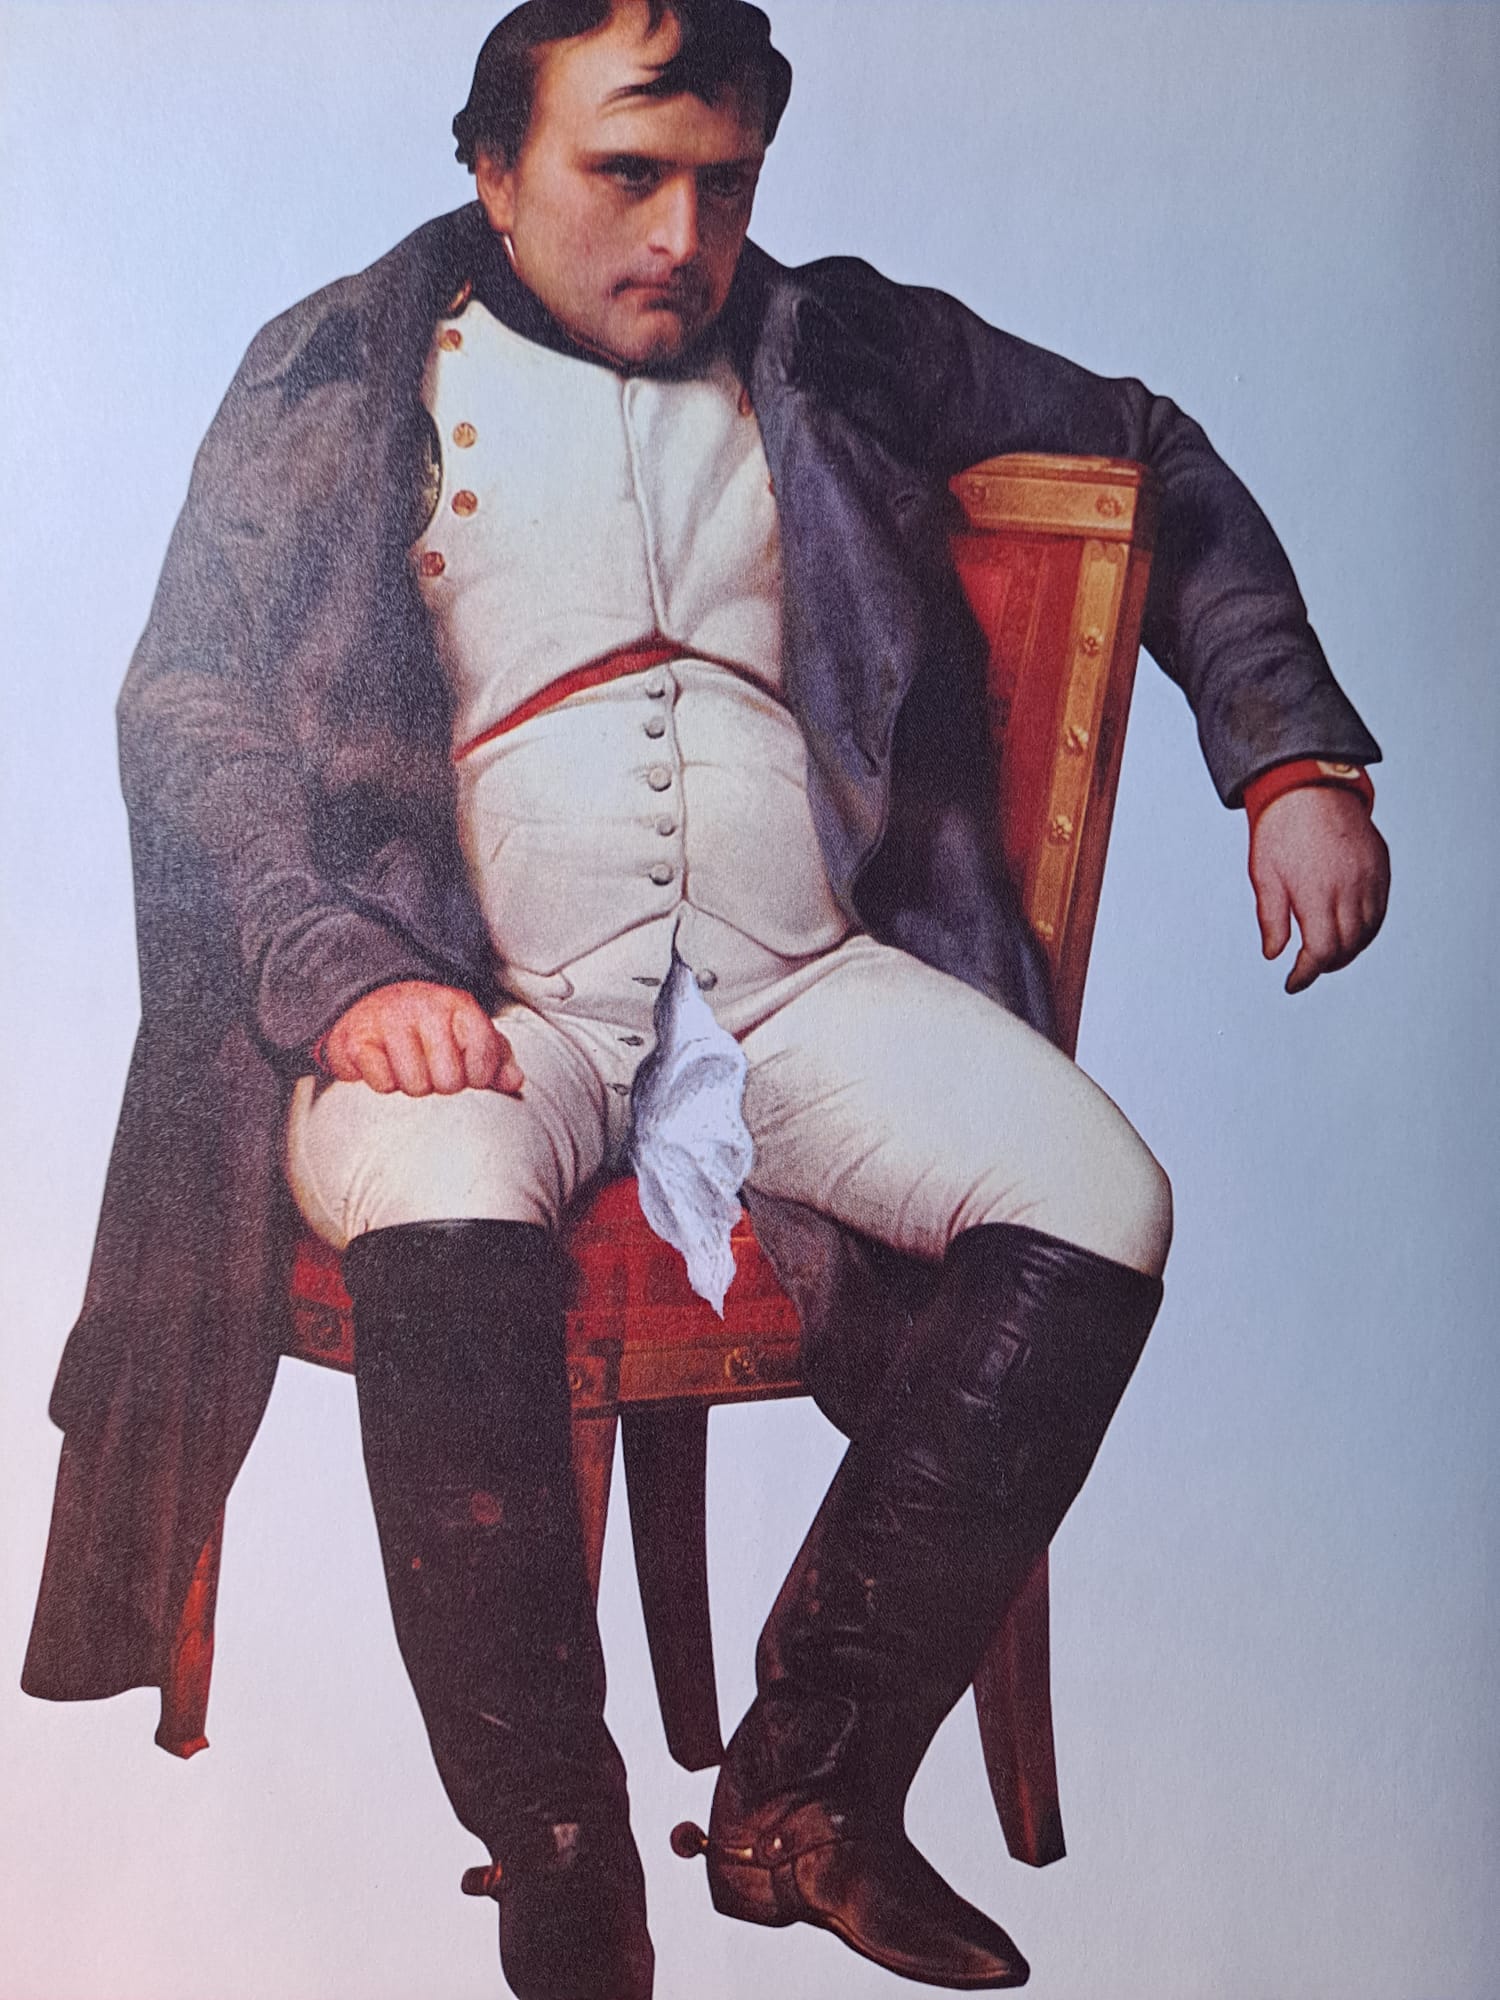 Napoleone visto da Francois Cavanna (Les Aventures de Napoleon, Charlie Hebdo 2002).